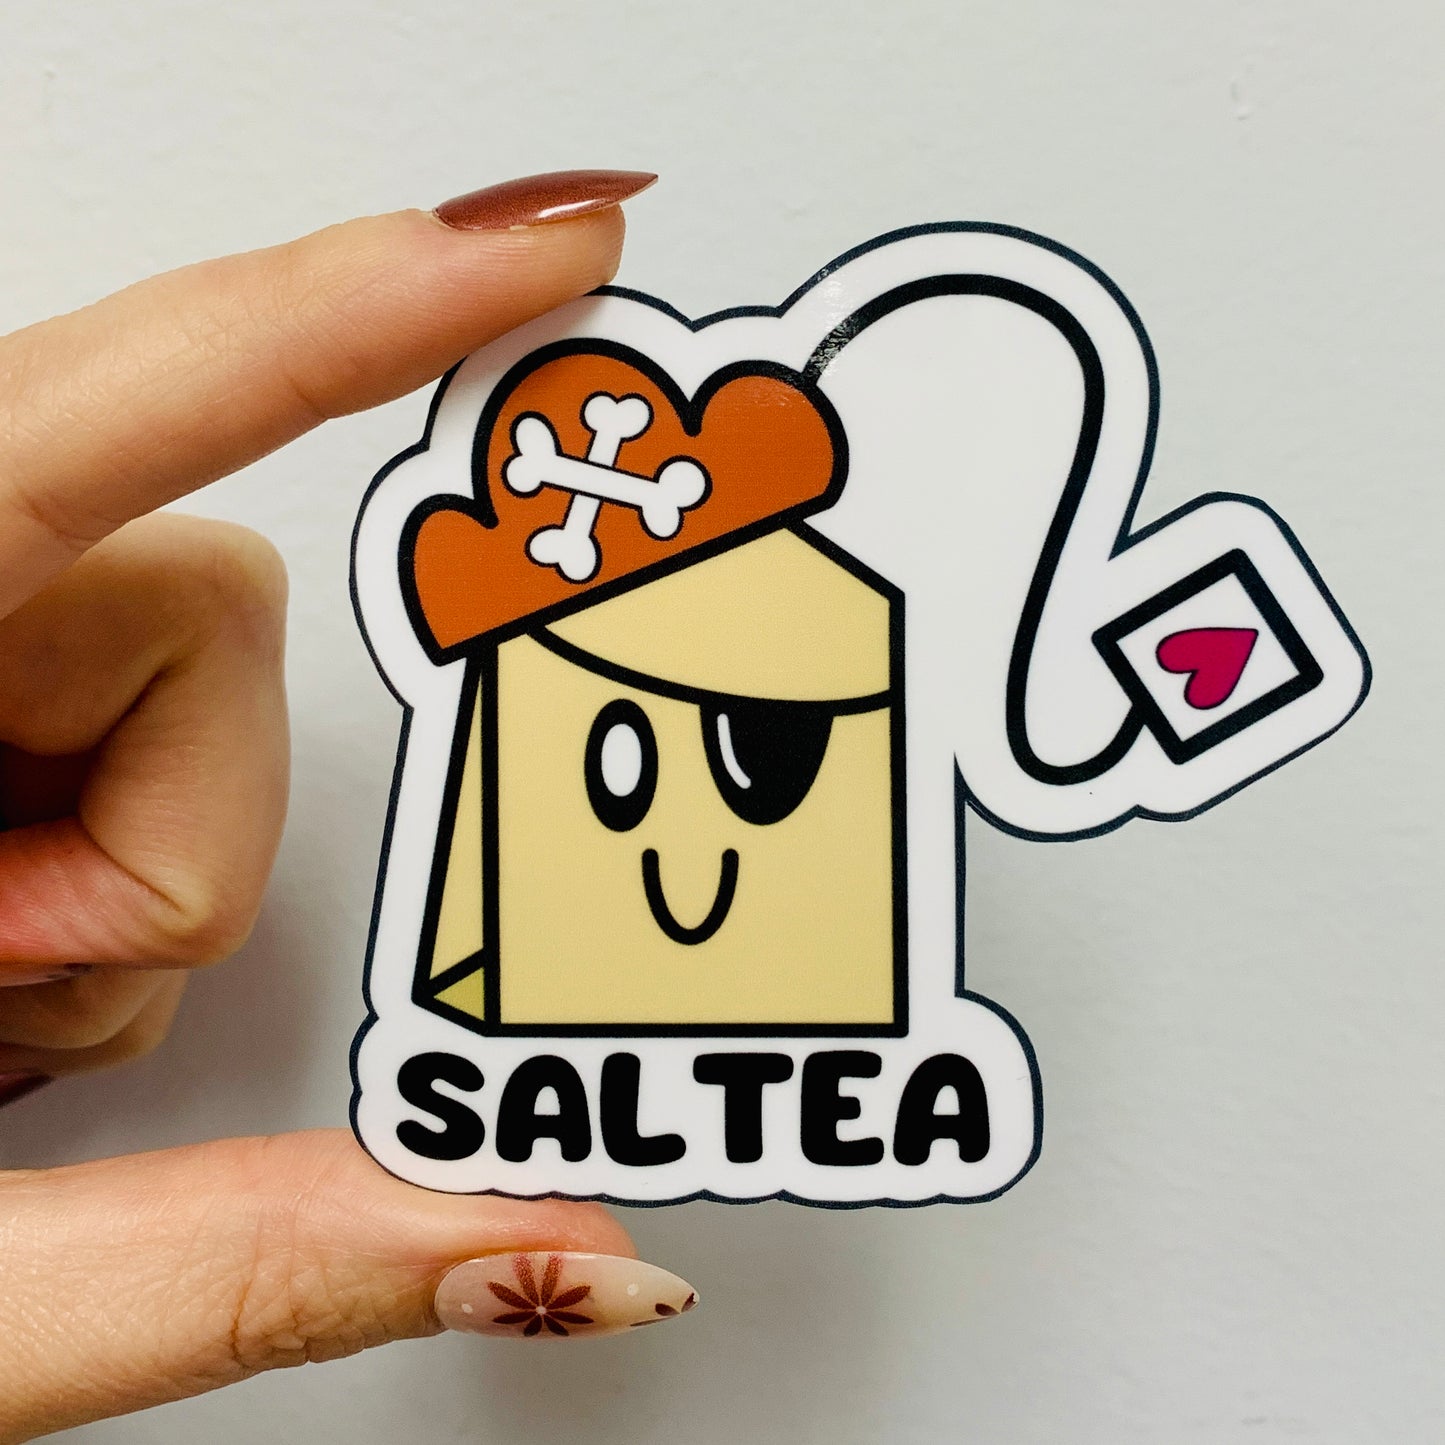 Saltea Vinyl Sticker